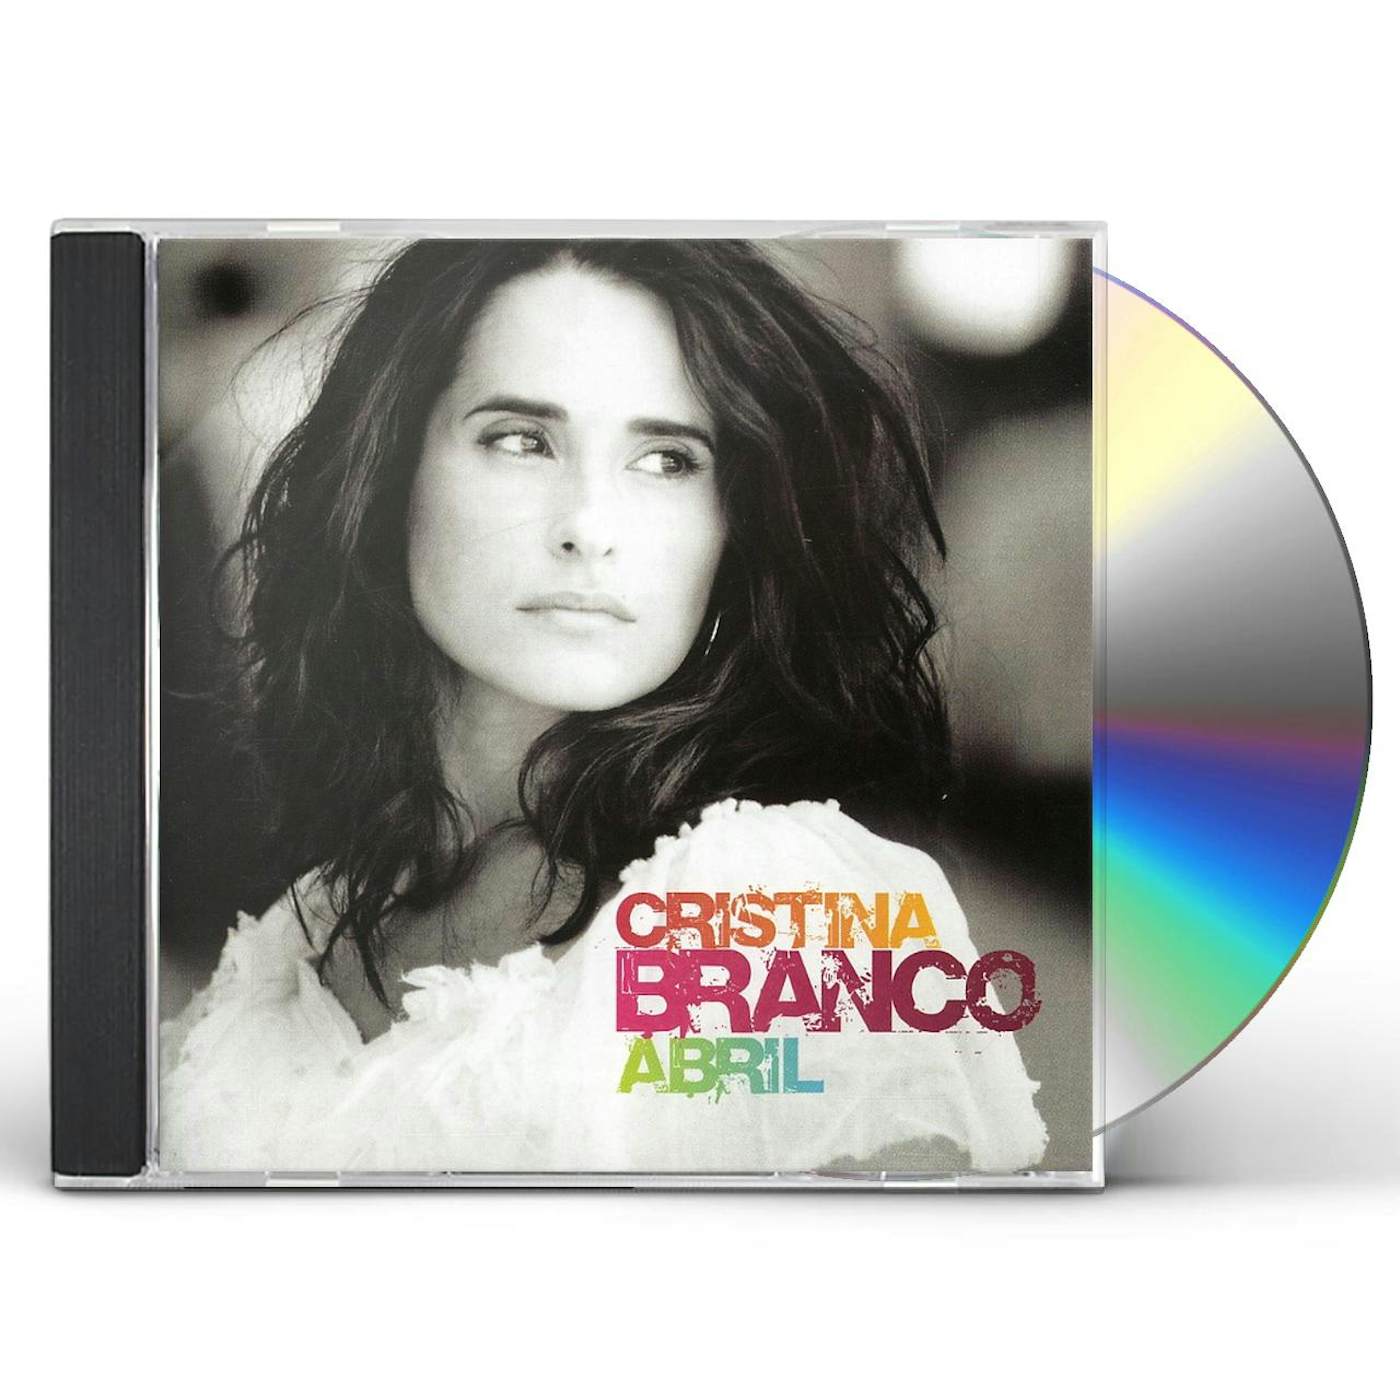 Cristina Branco ABRIL CD